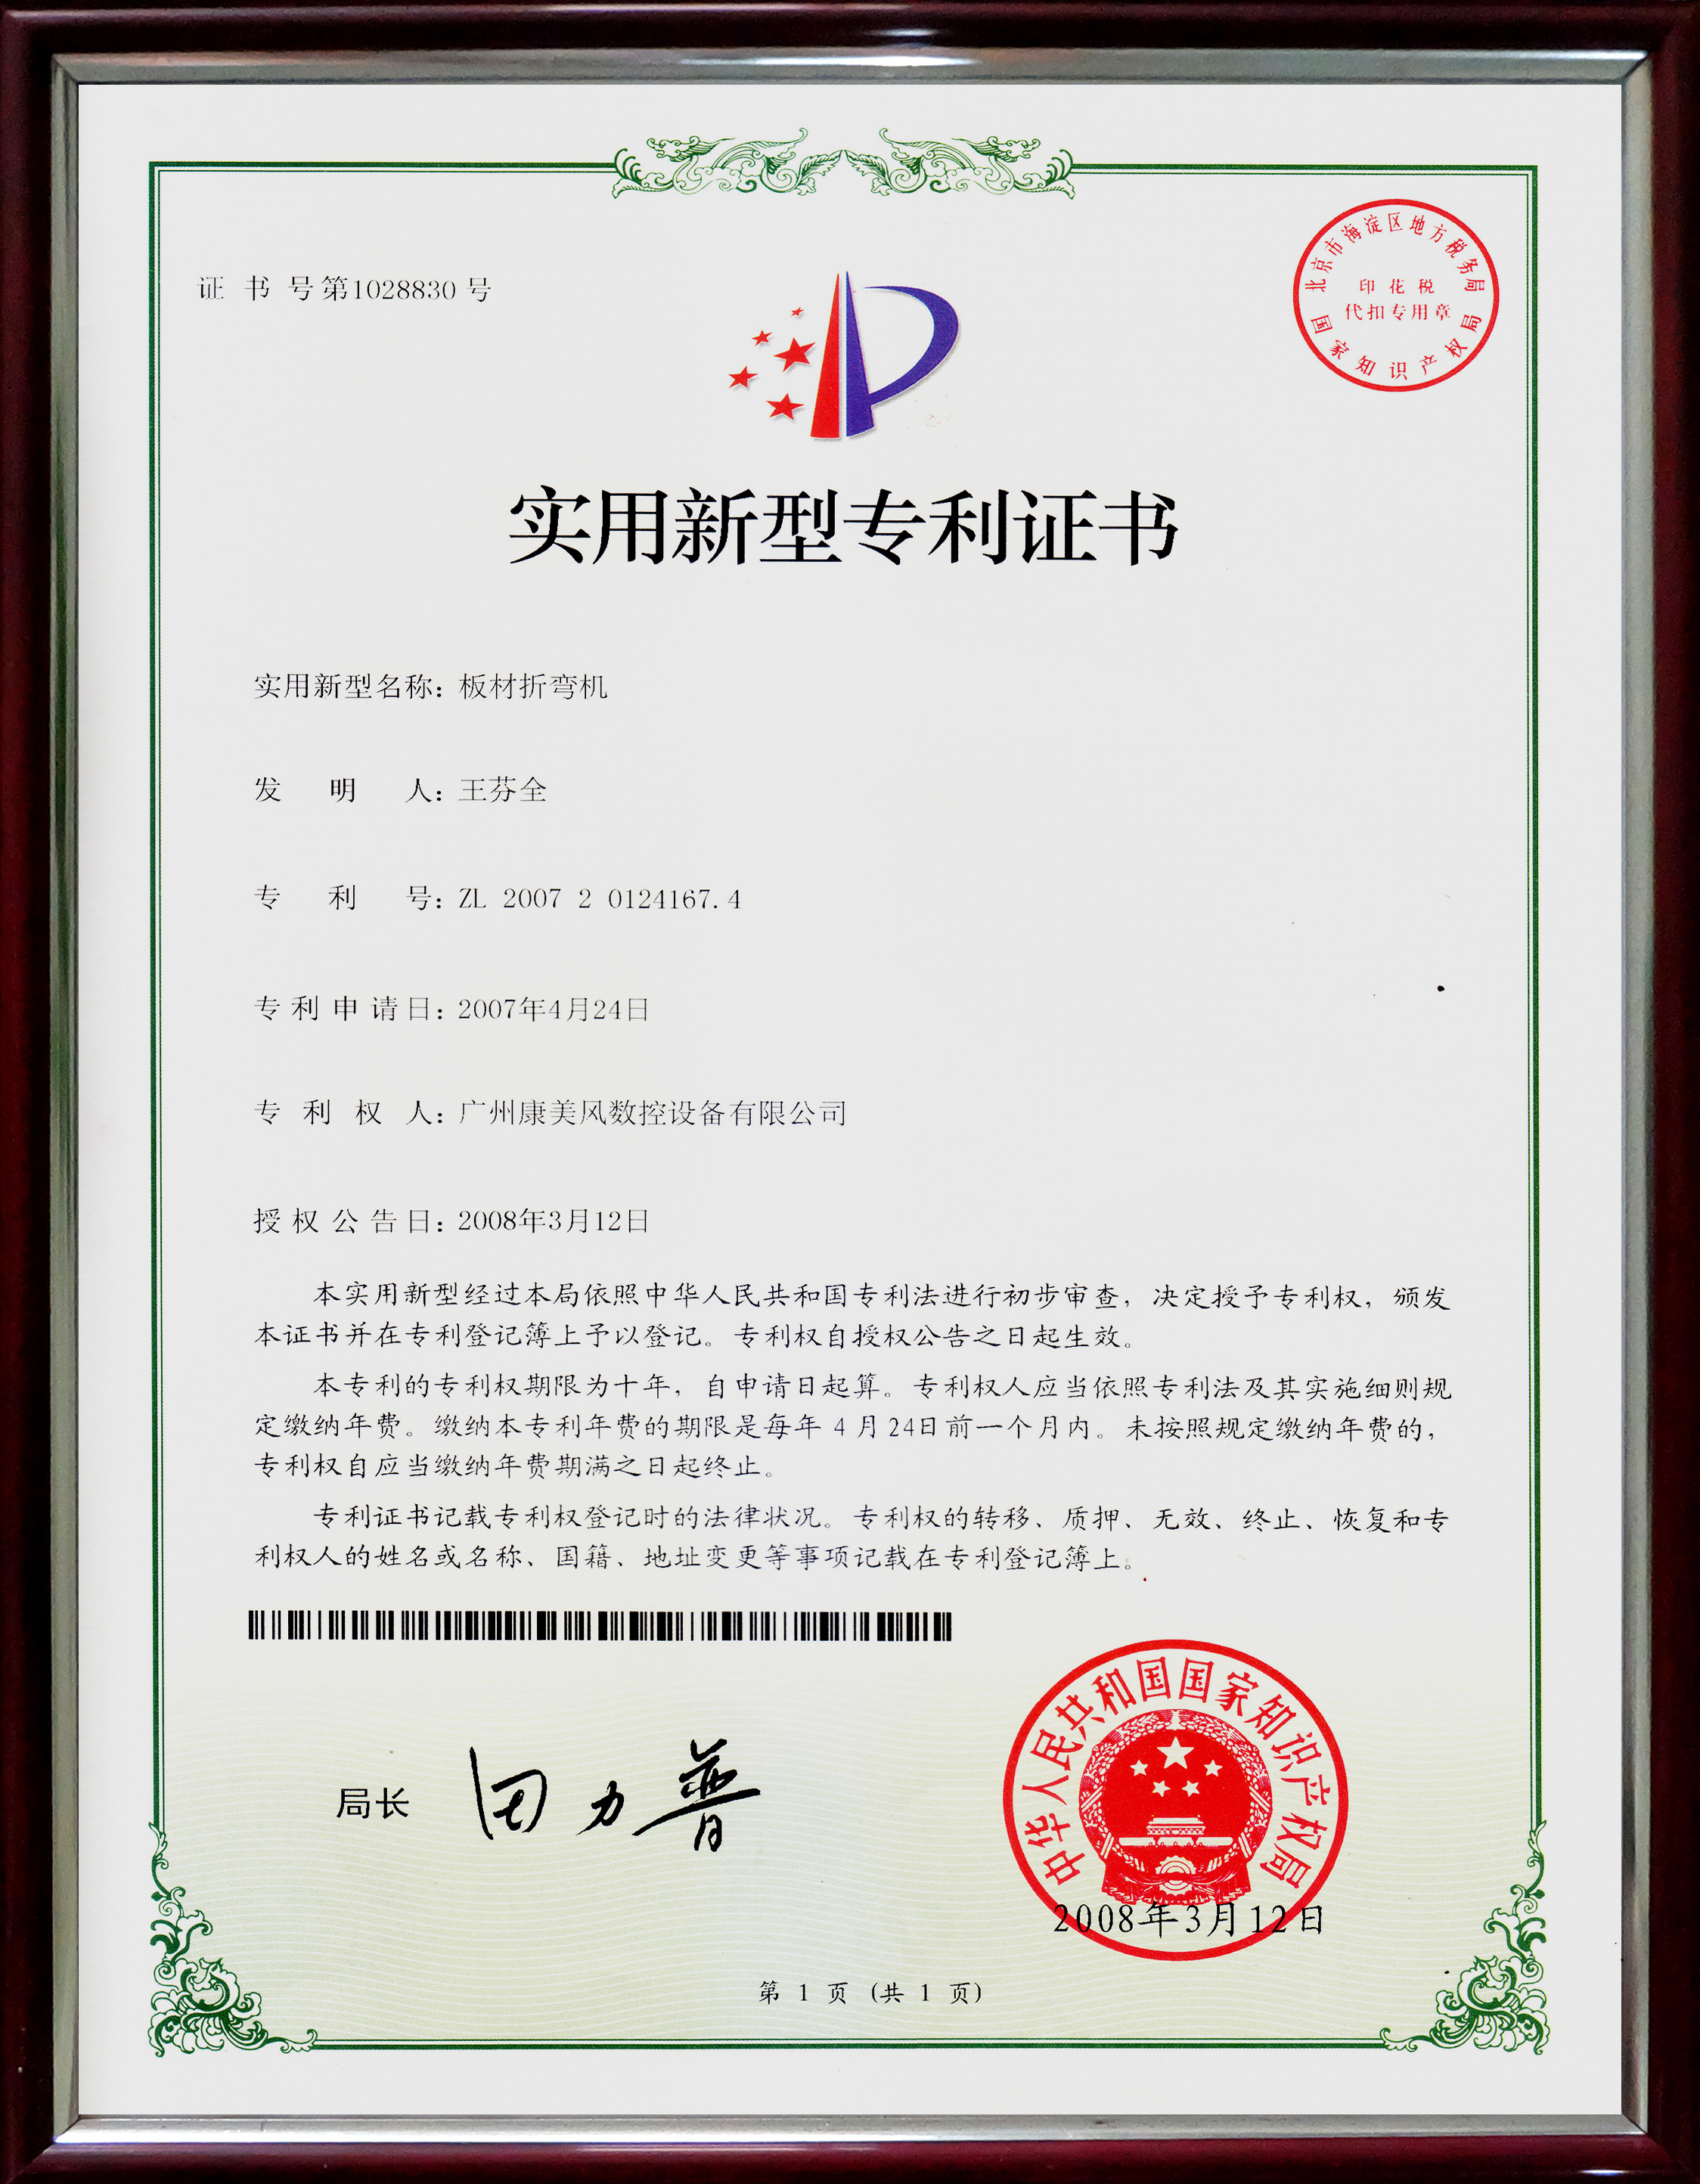 Plate bending machine patent certificate